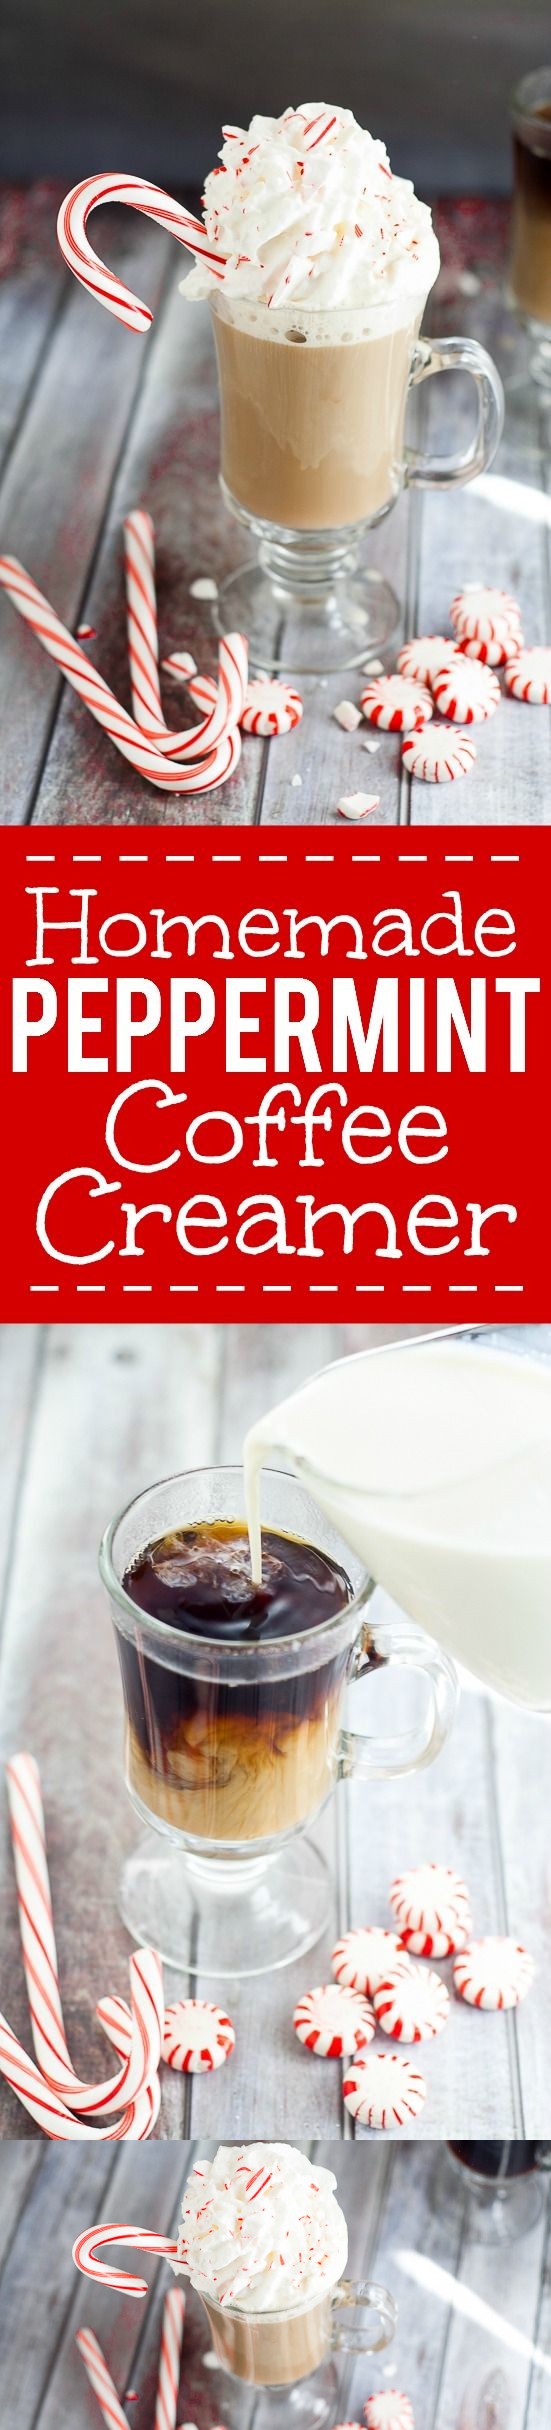 peppermint creamer drink for kids